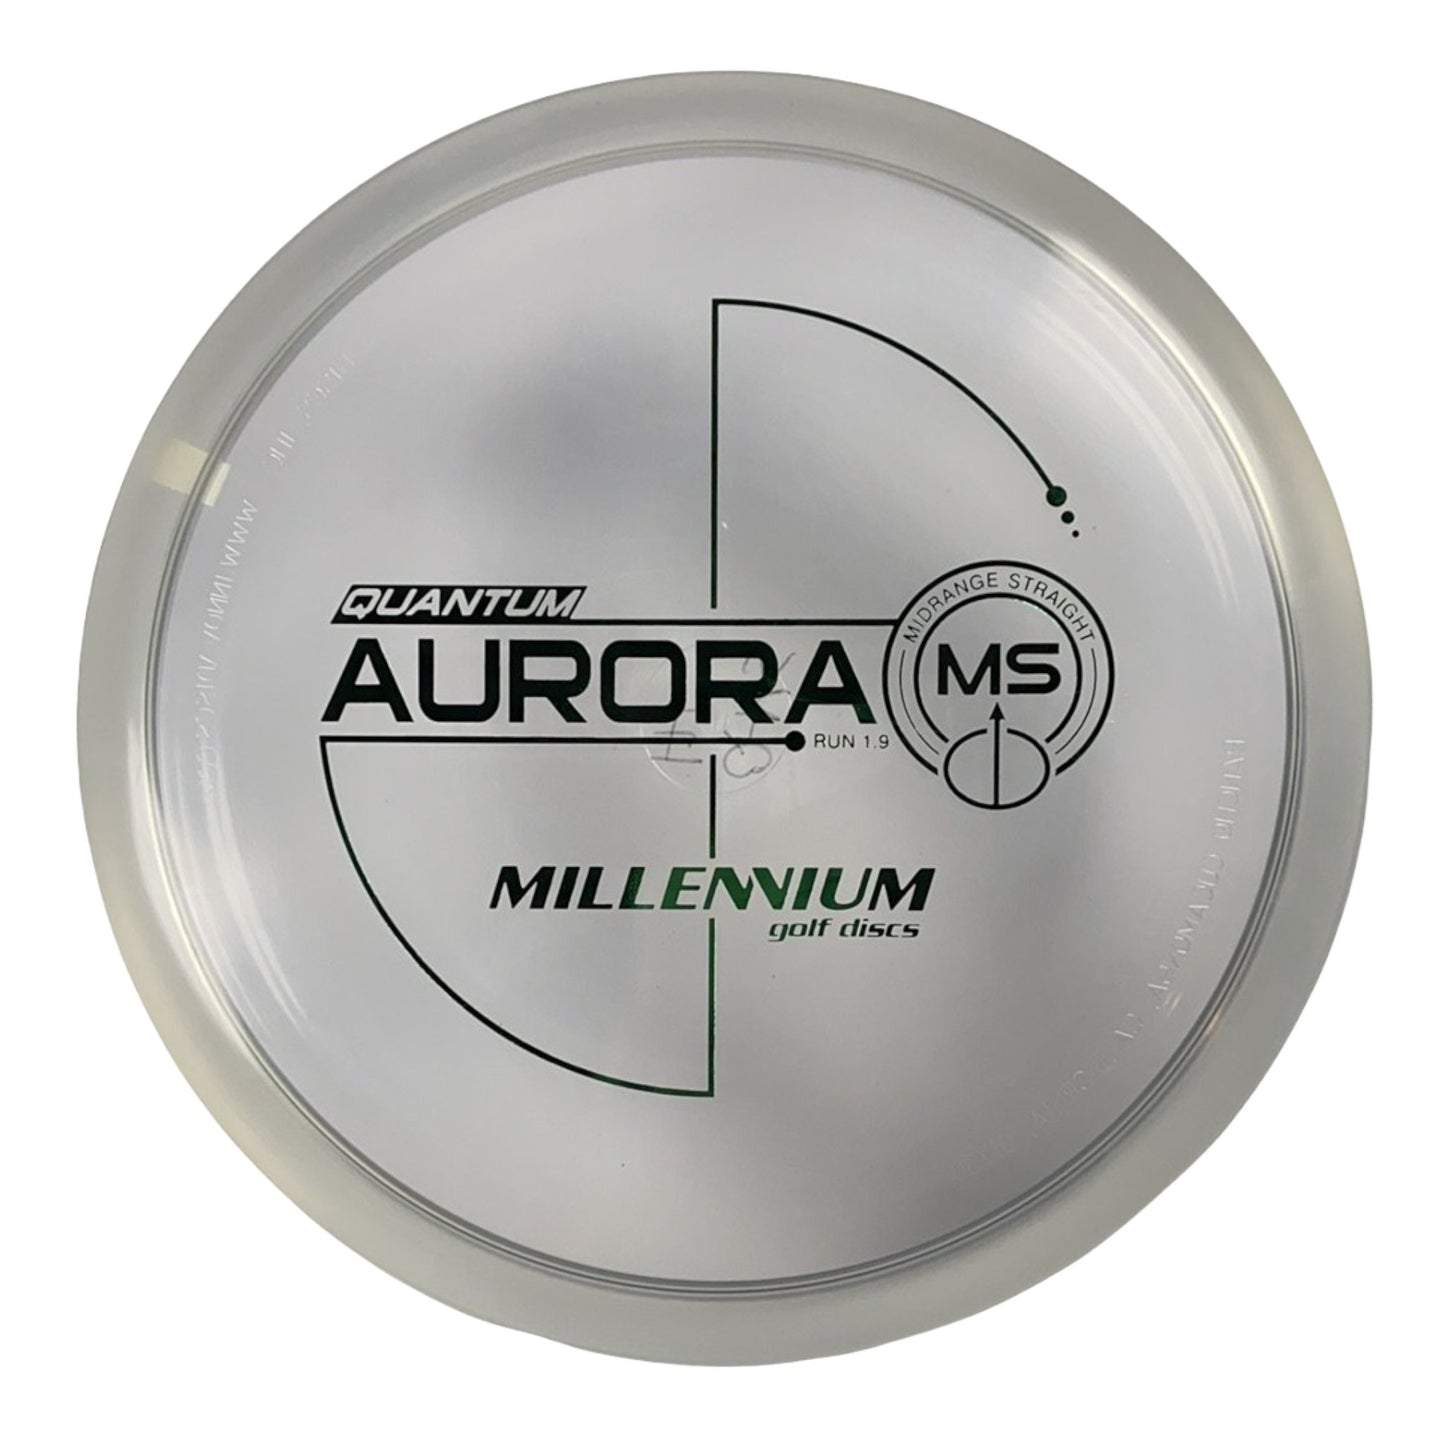 Millennium Golf Discs Aurora MS | Quantum | Clear/Green 171-175g Disc Golf